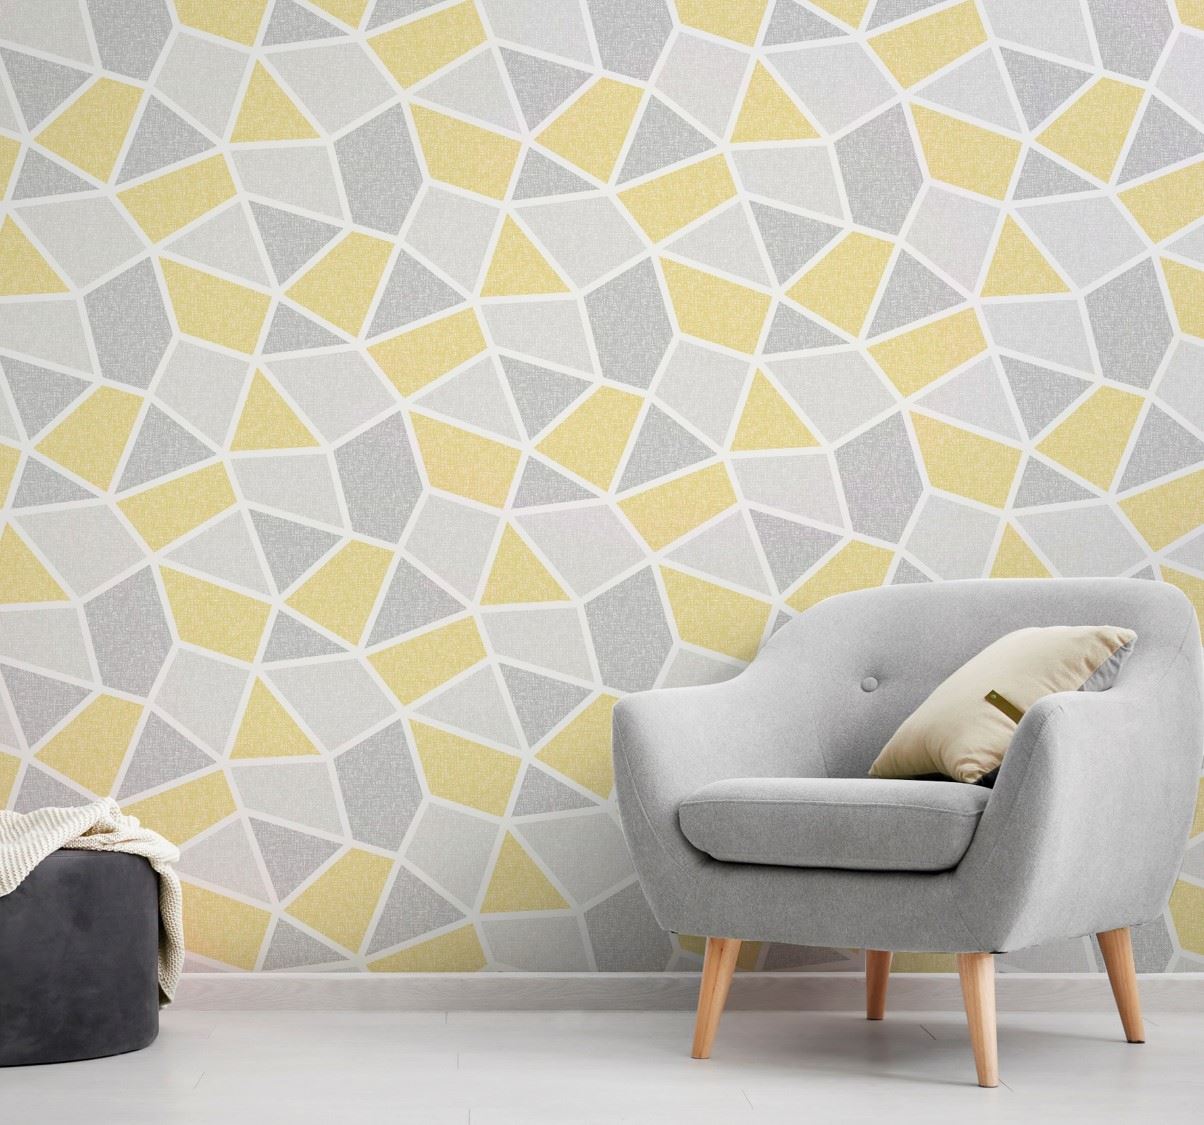 contemporary geometric wallpaper,wall,wallpaper,yellow,interior design,room